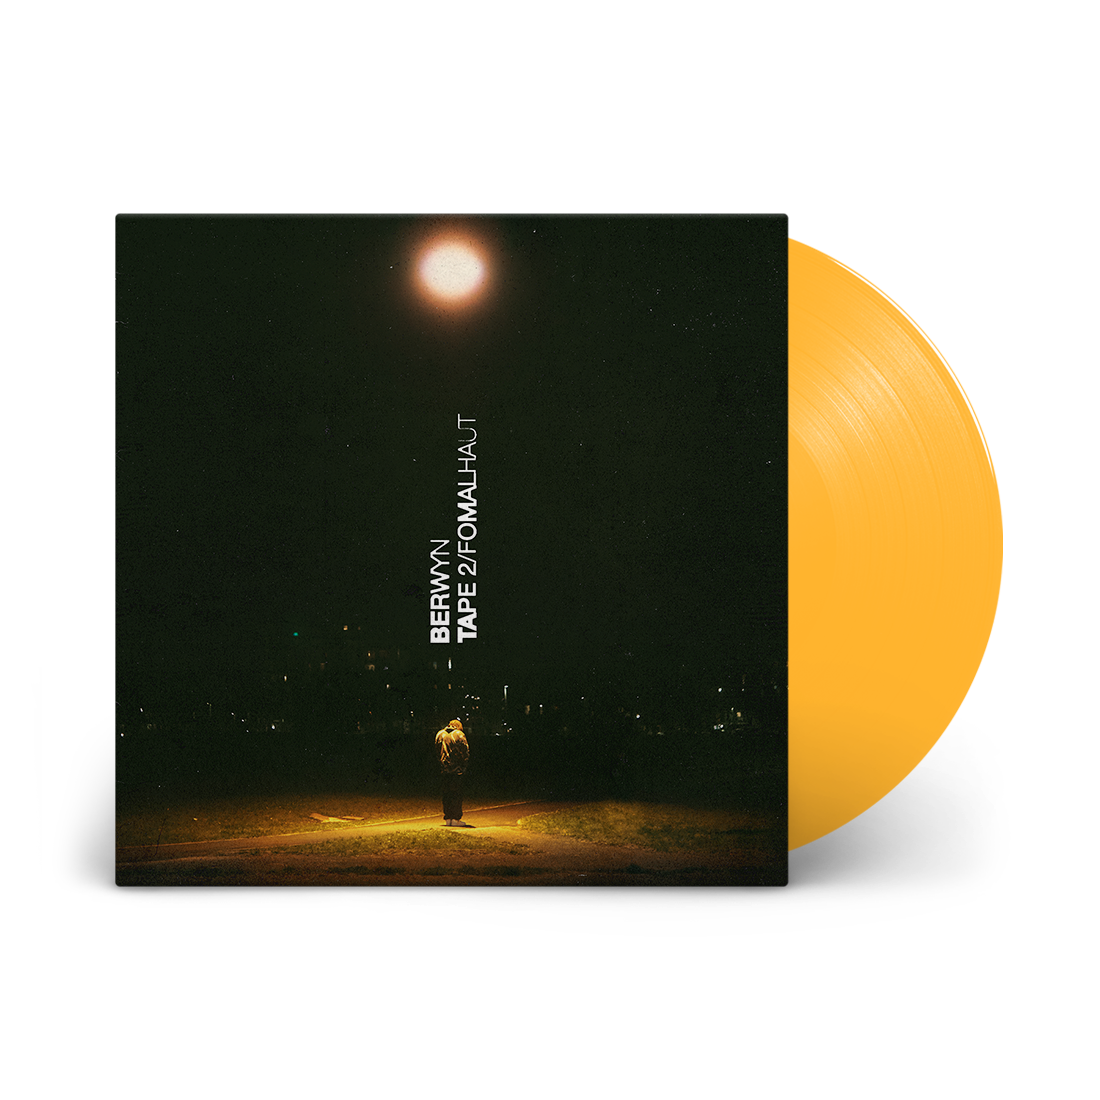 TAPE 2/FOMALHAUT: Limited Edition Yellow Vinyl LP